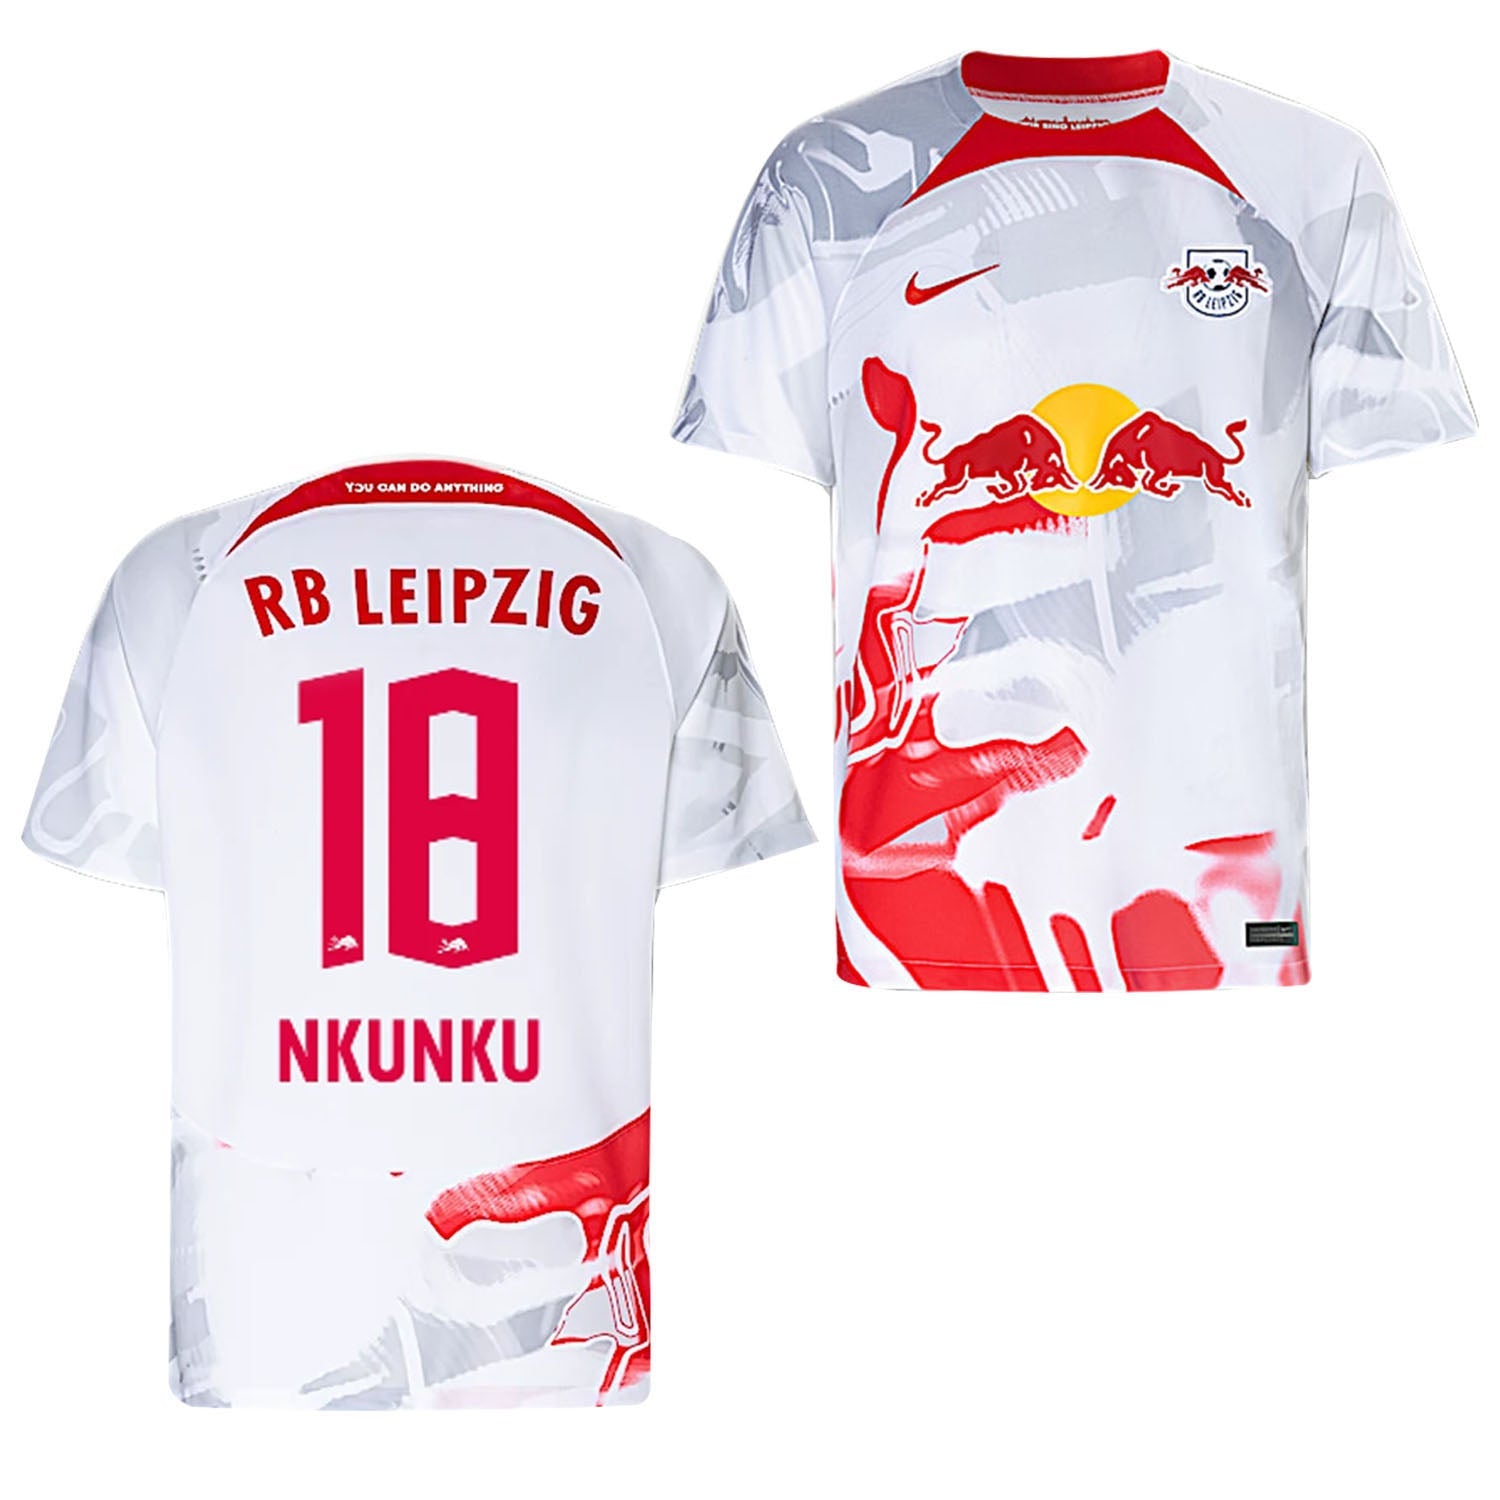 Christopher Nkunku RB Leipzig 18 Jersey – jerseysspace